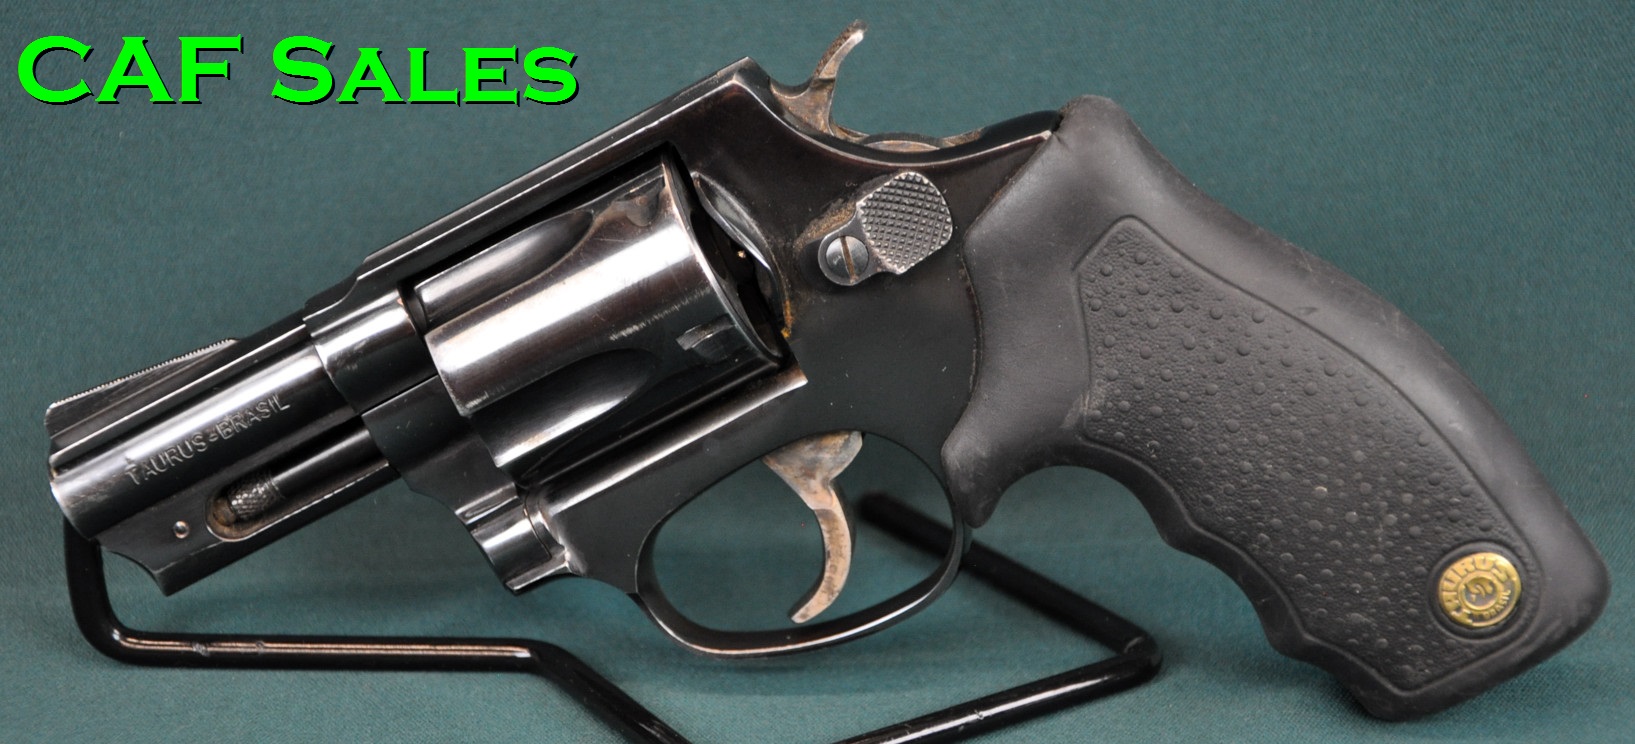 taurus-model-605-357-mag-revolver-for-sale-at-gunauction-12824897